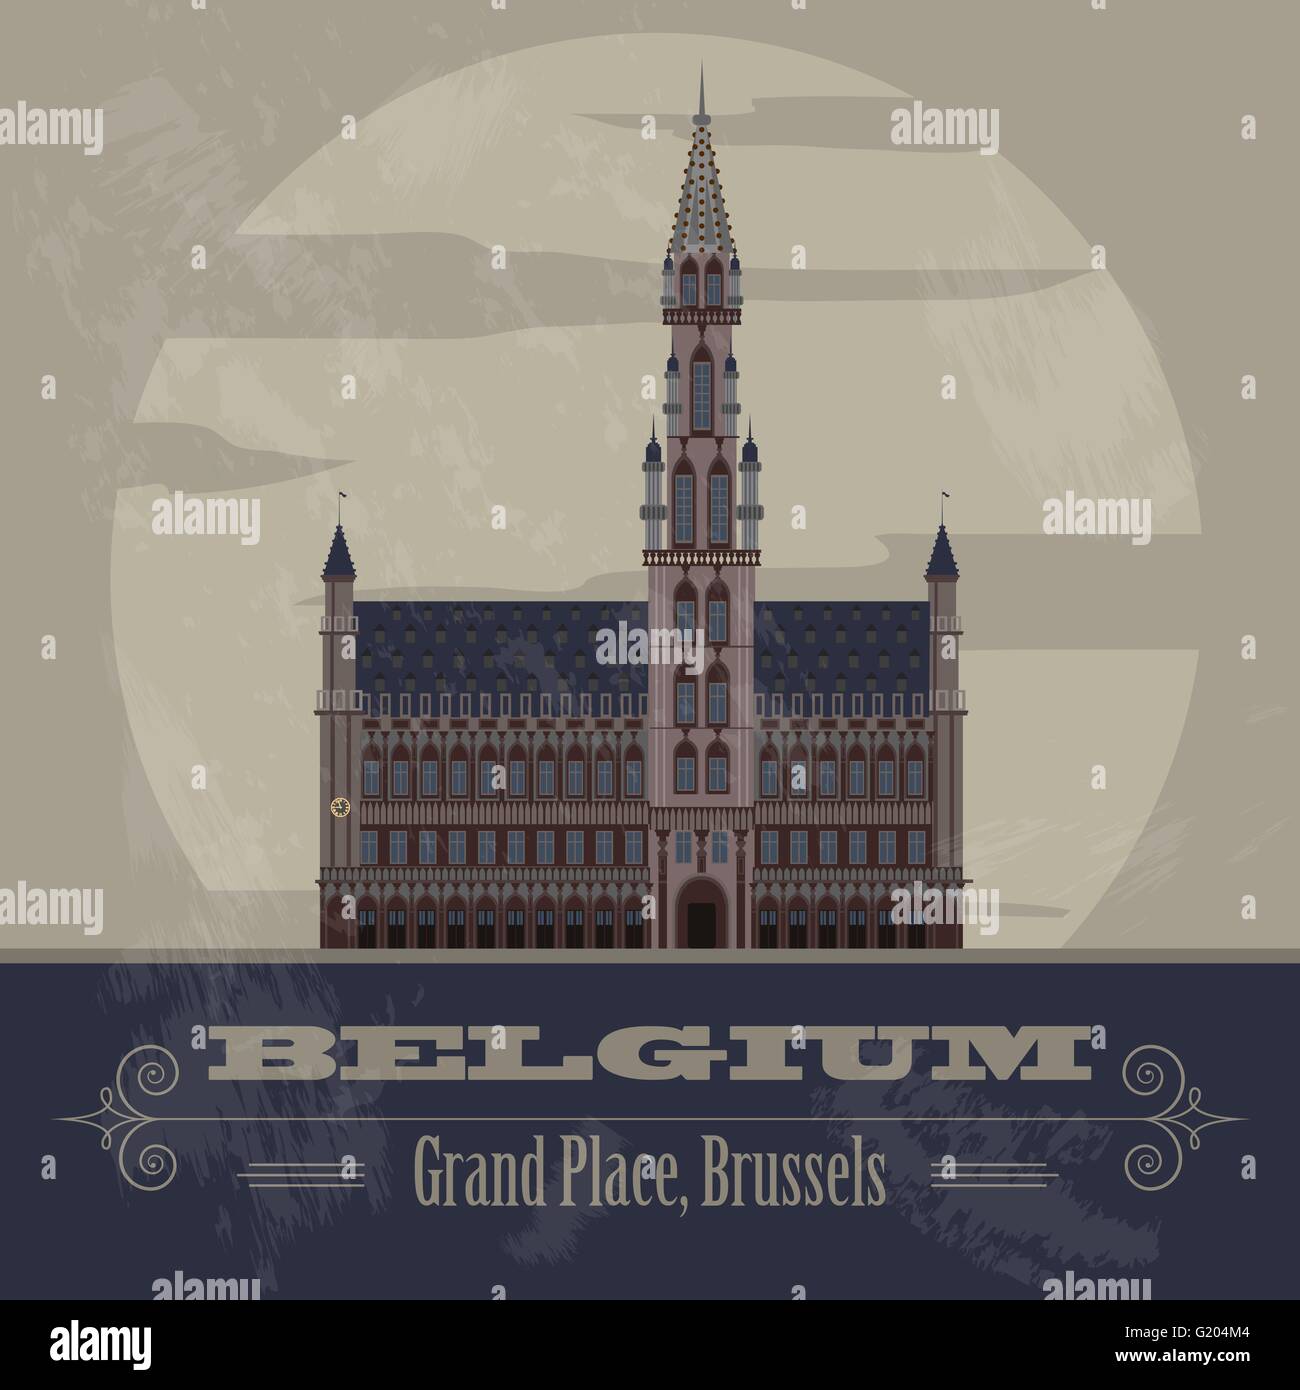 Belgium landmarks. Retro styled image. Vector illustration Stock Vector